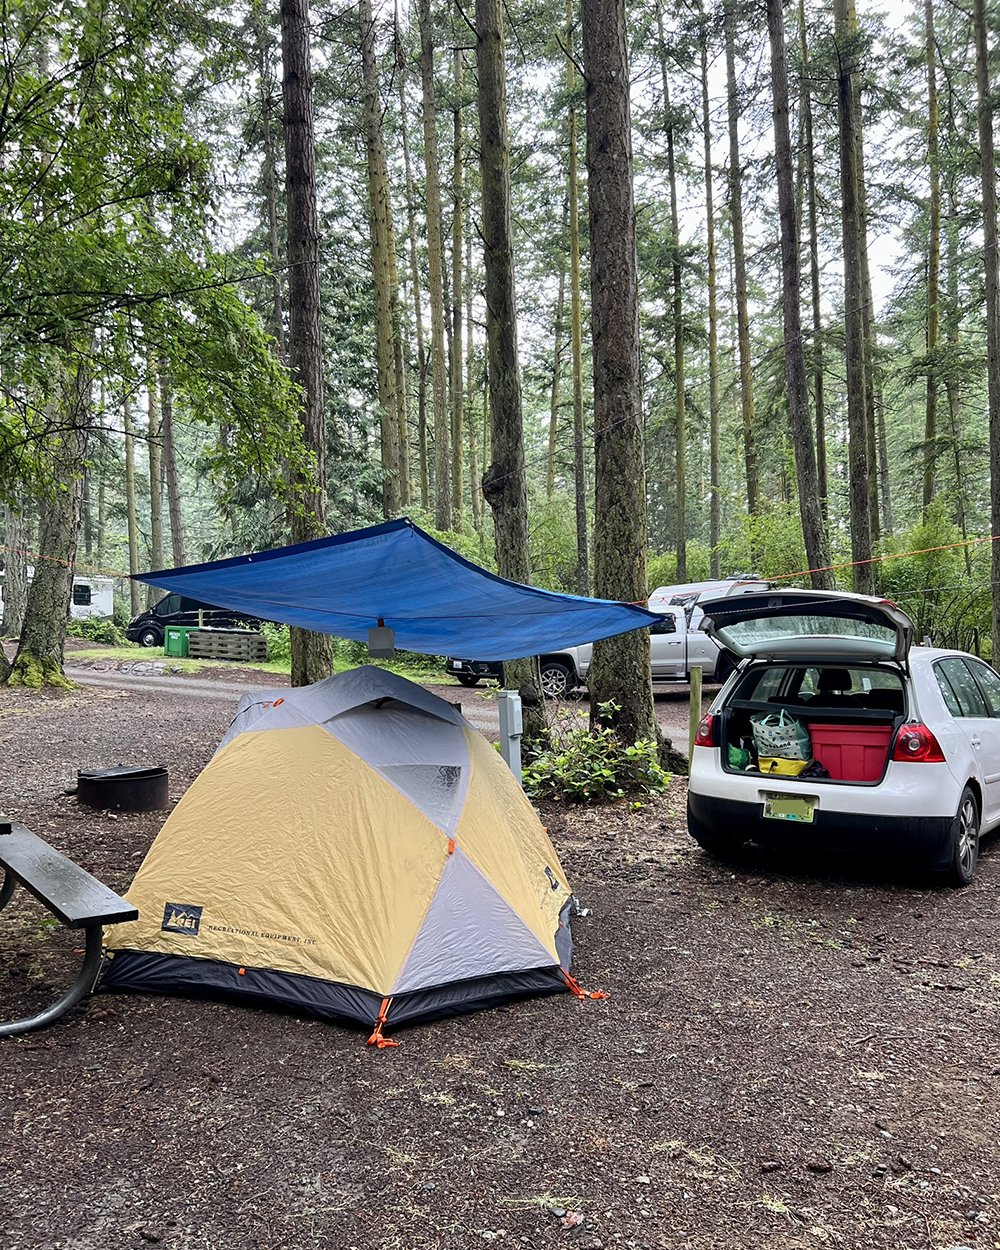  Car camping for the weekend at Washington Park. 